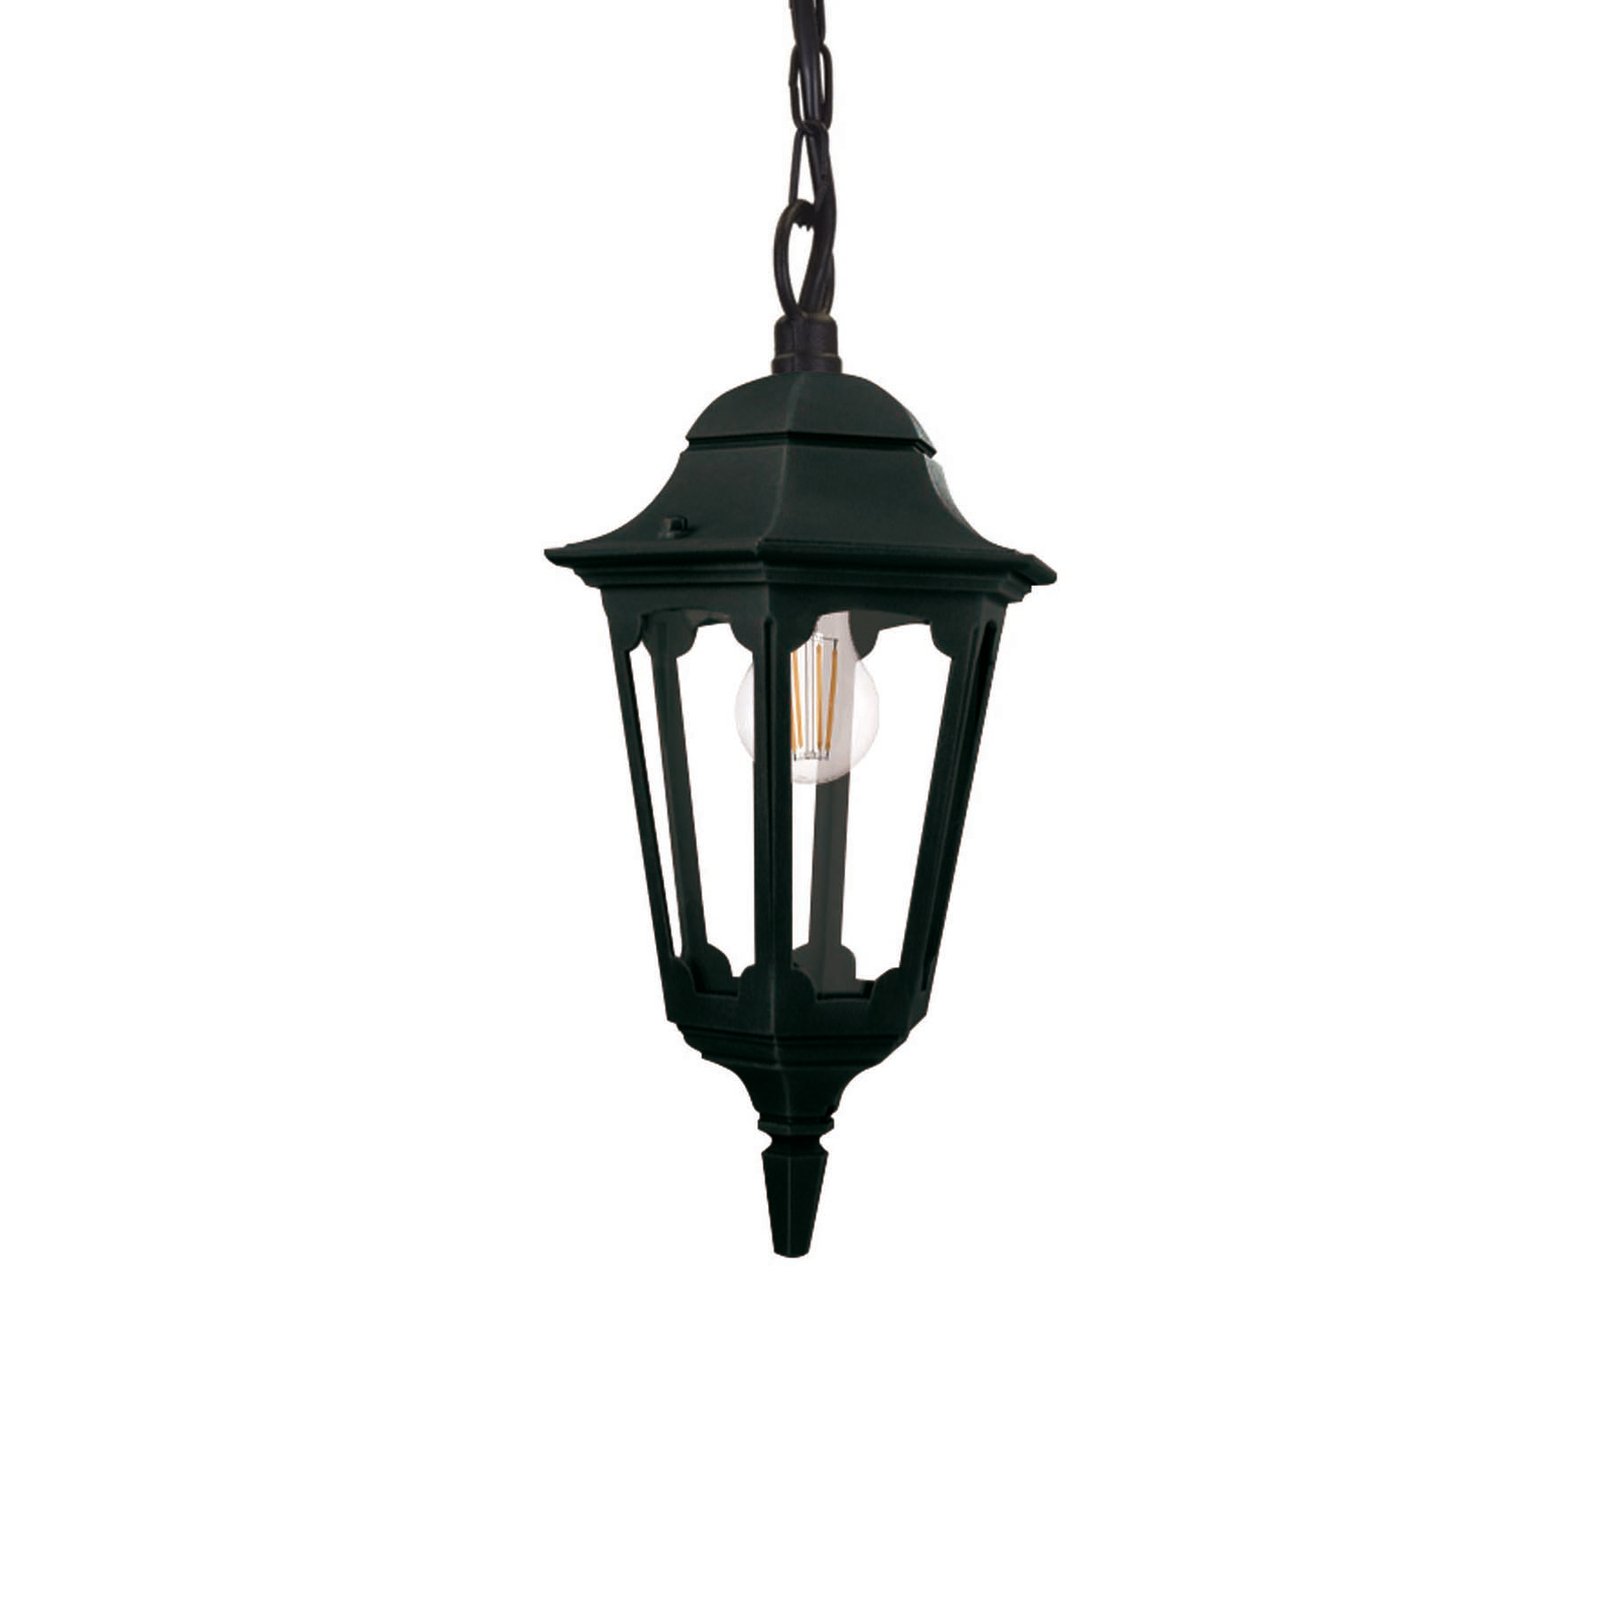 Parish pendant light with chain suspension, height 42 cm